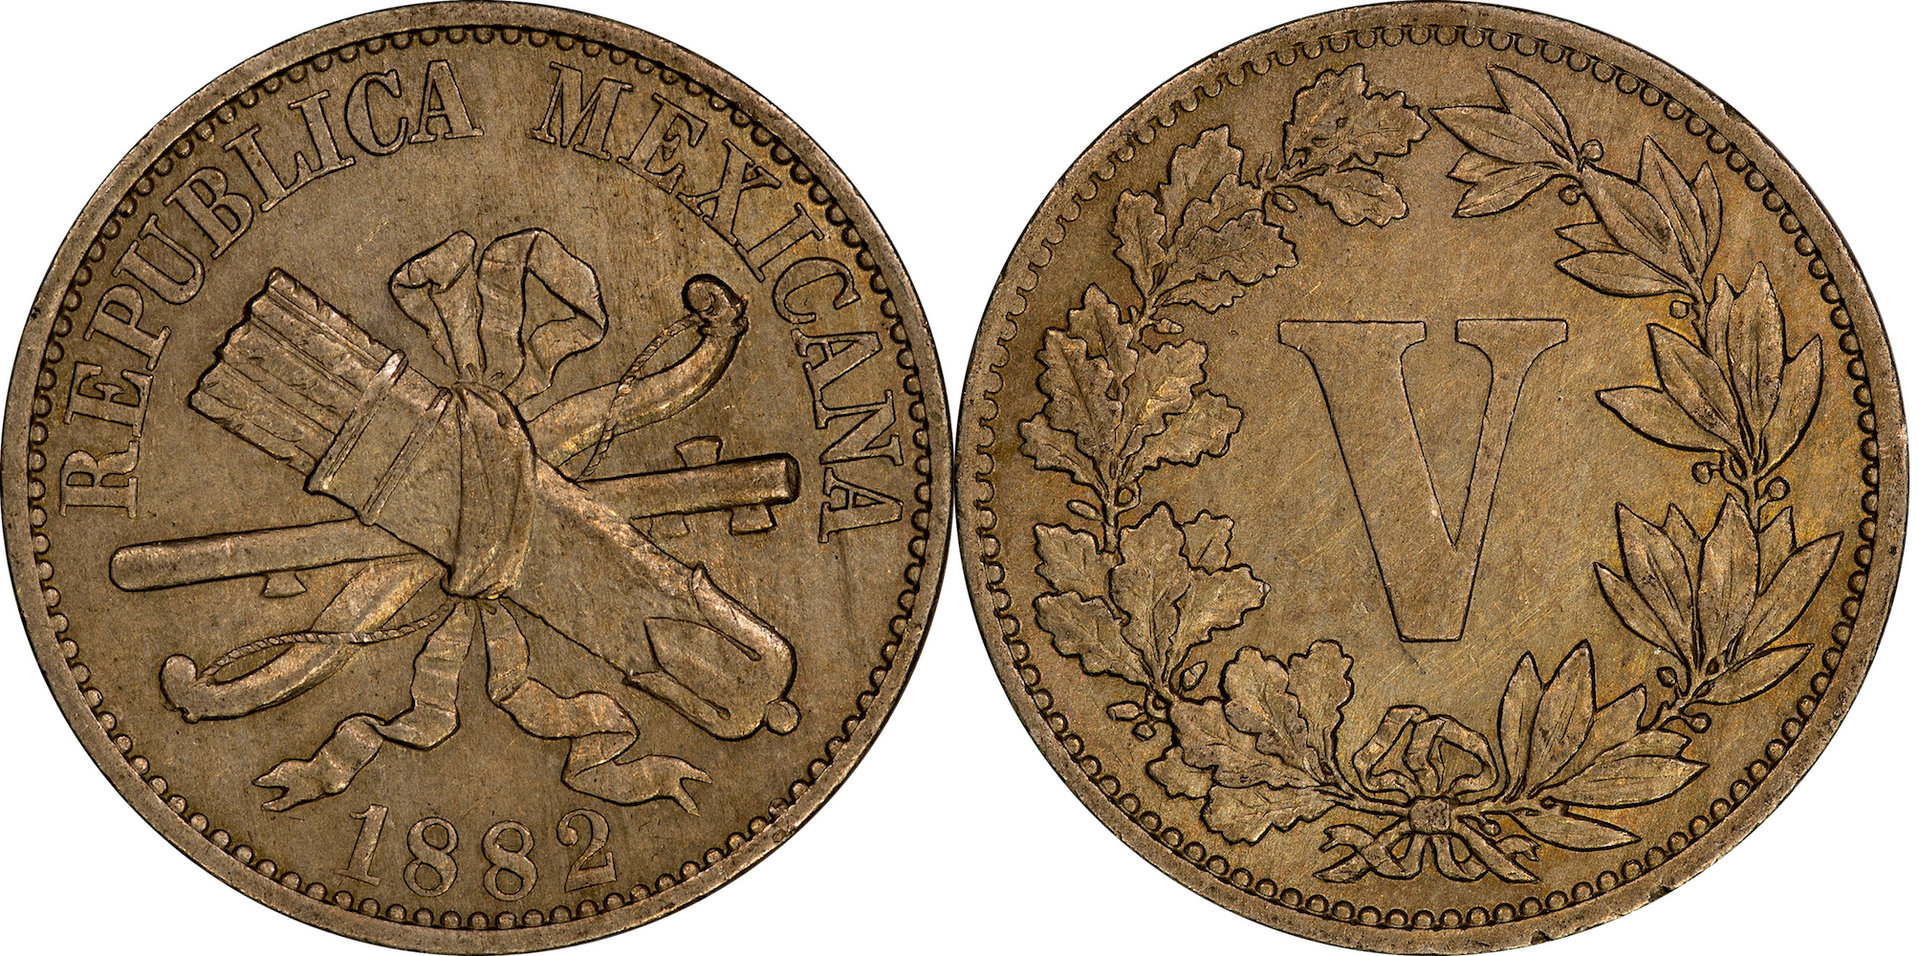 Mexico - 1882 5 Cents.jpg